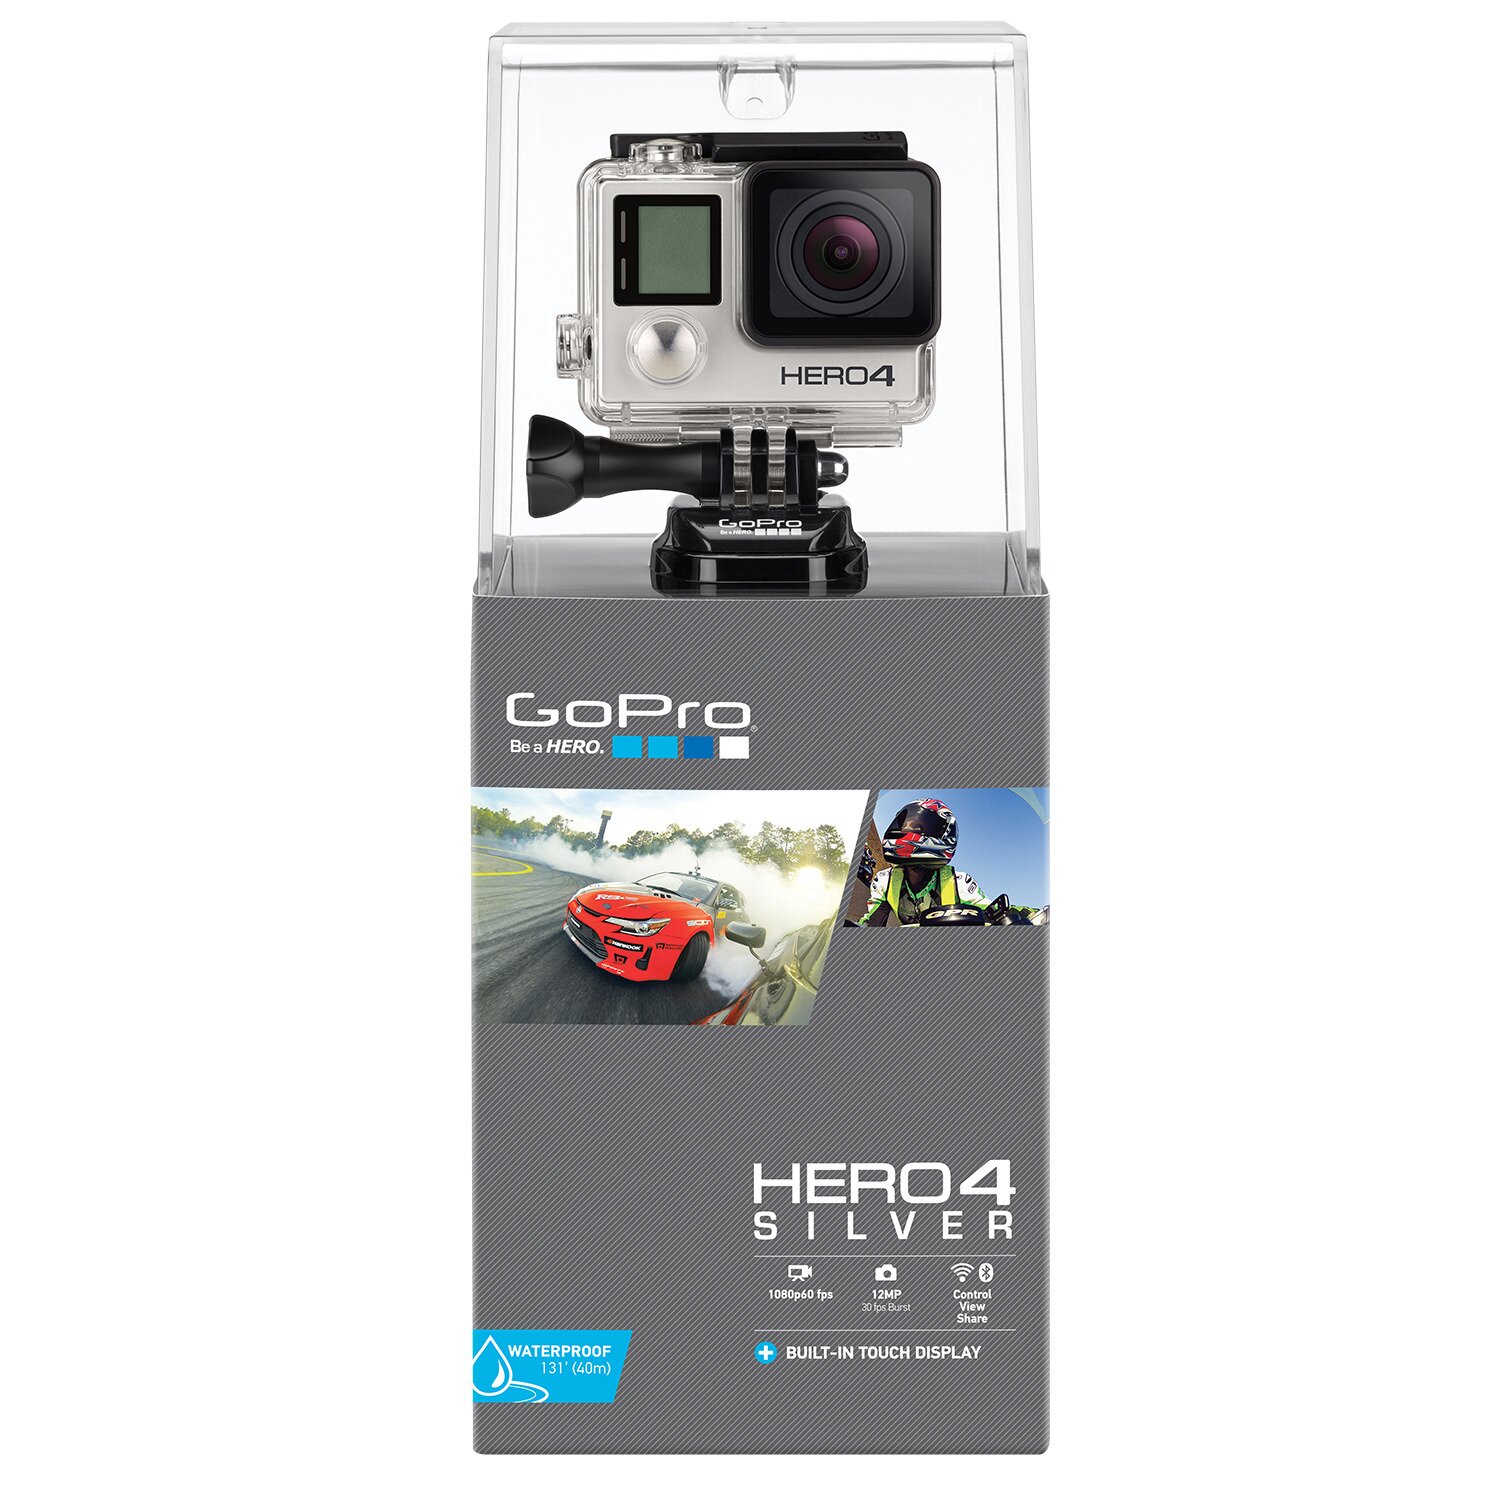 GoPro Hero 4 Silver edition